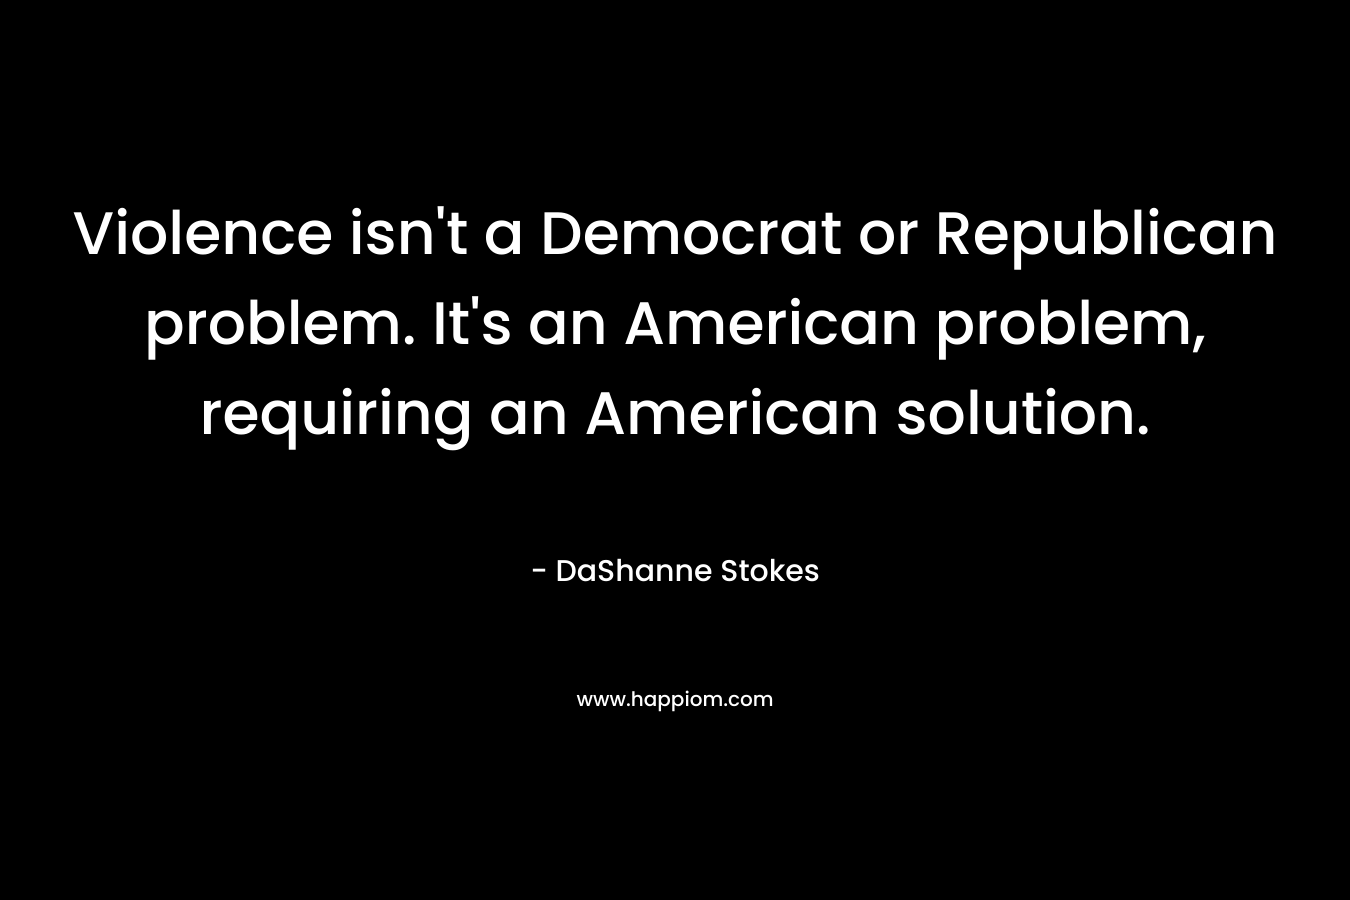 Violence isn't a Democrat or Republican problem. It's an American problem, requiring an American solution.